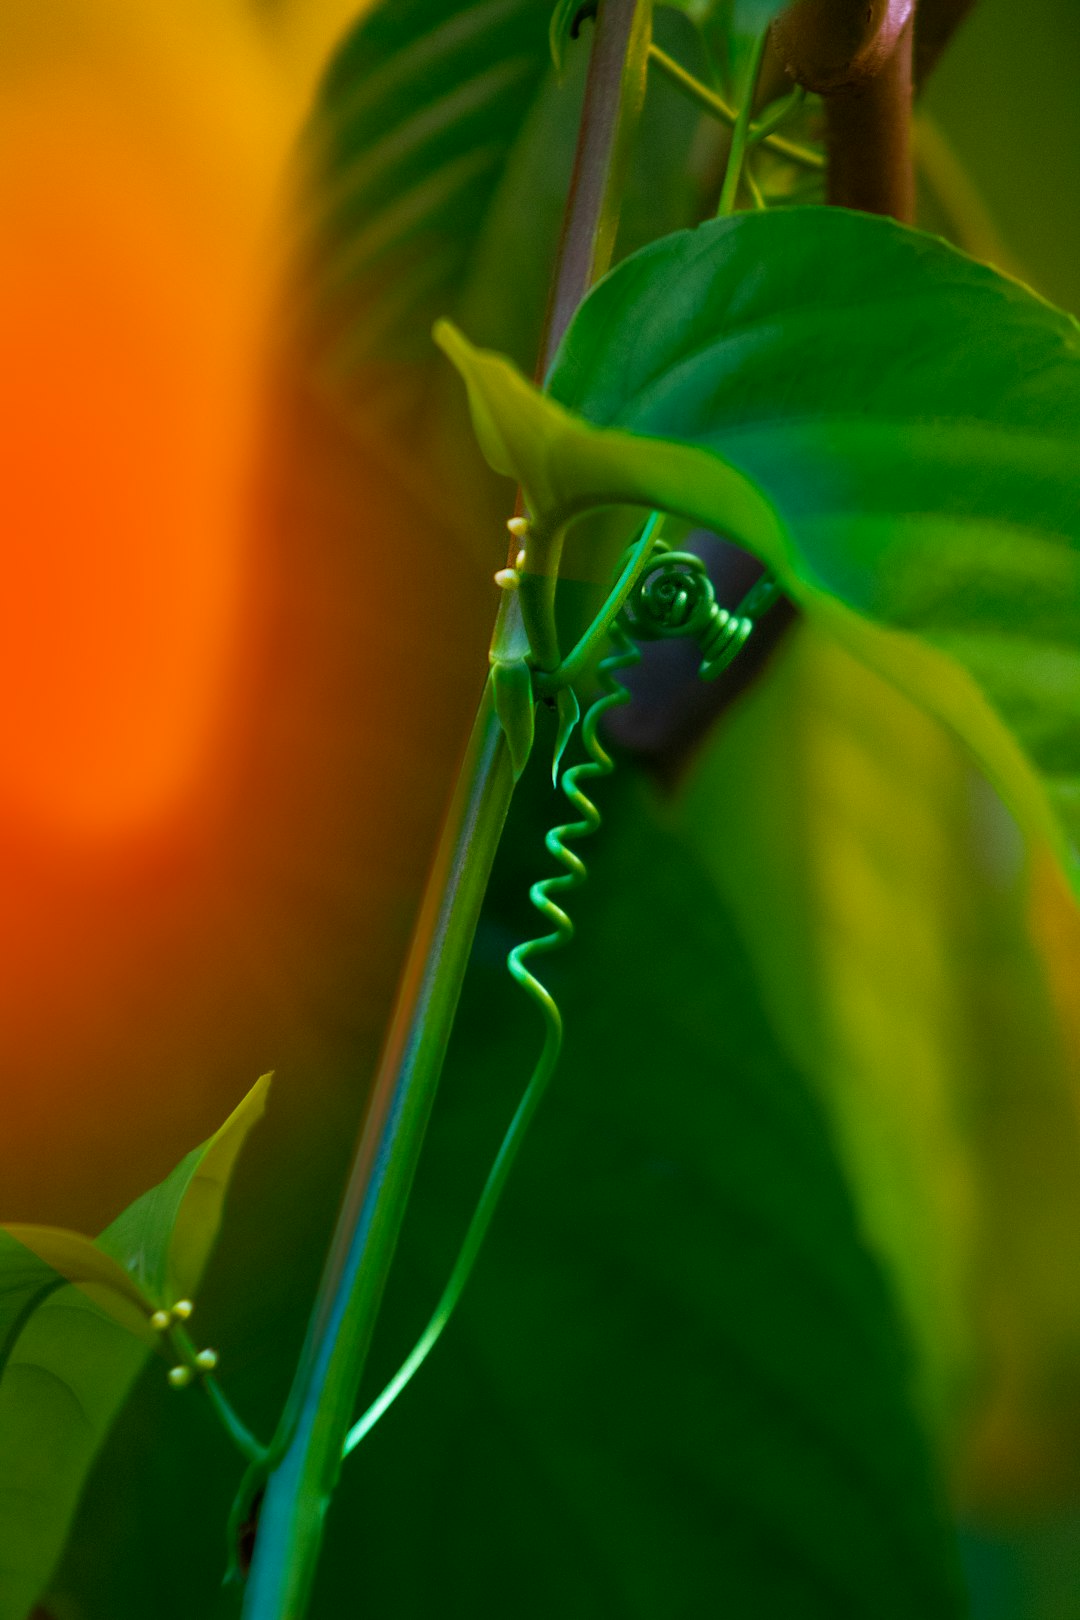 green frog on green leaf